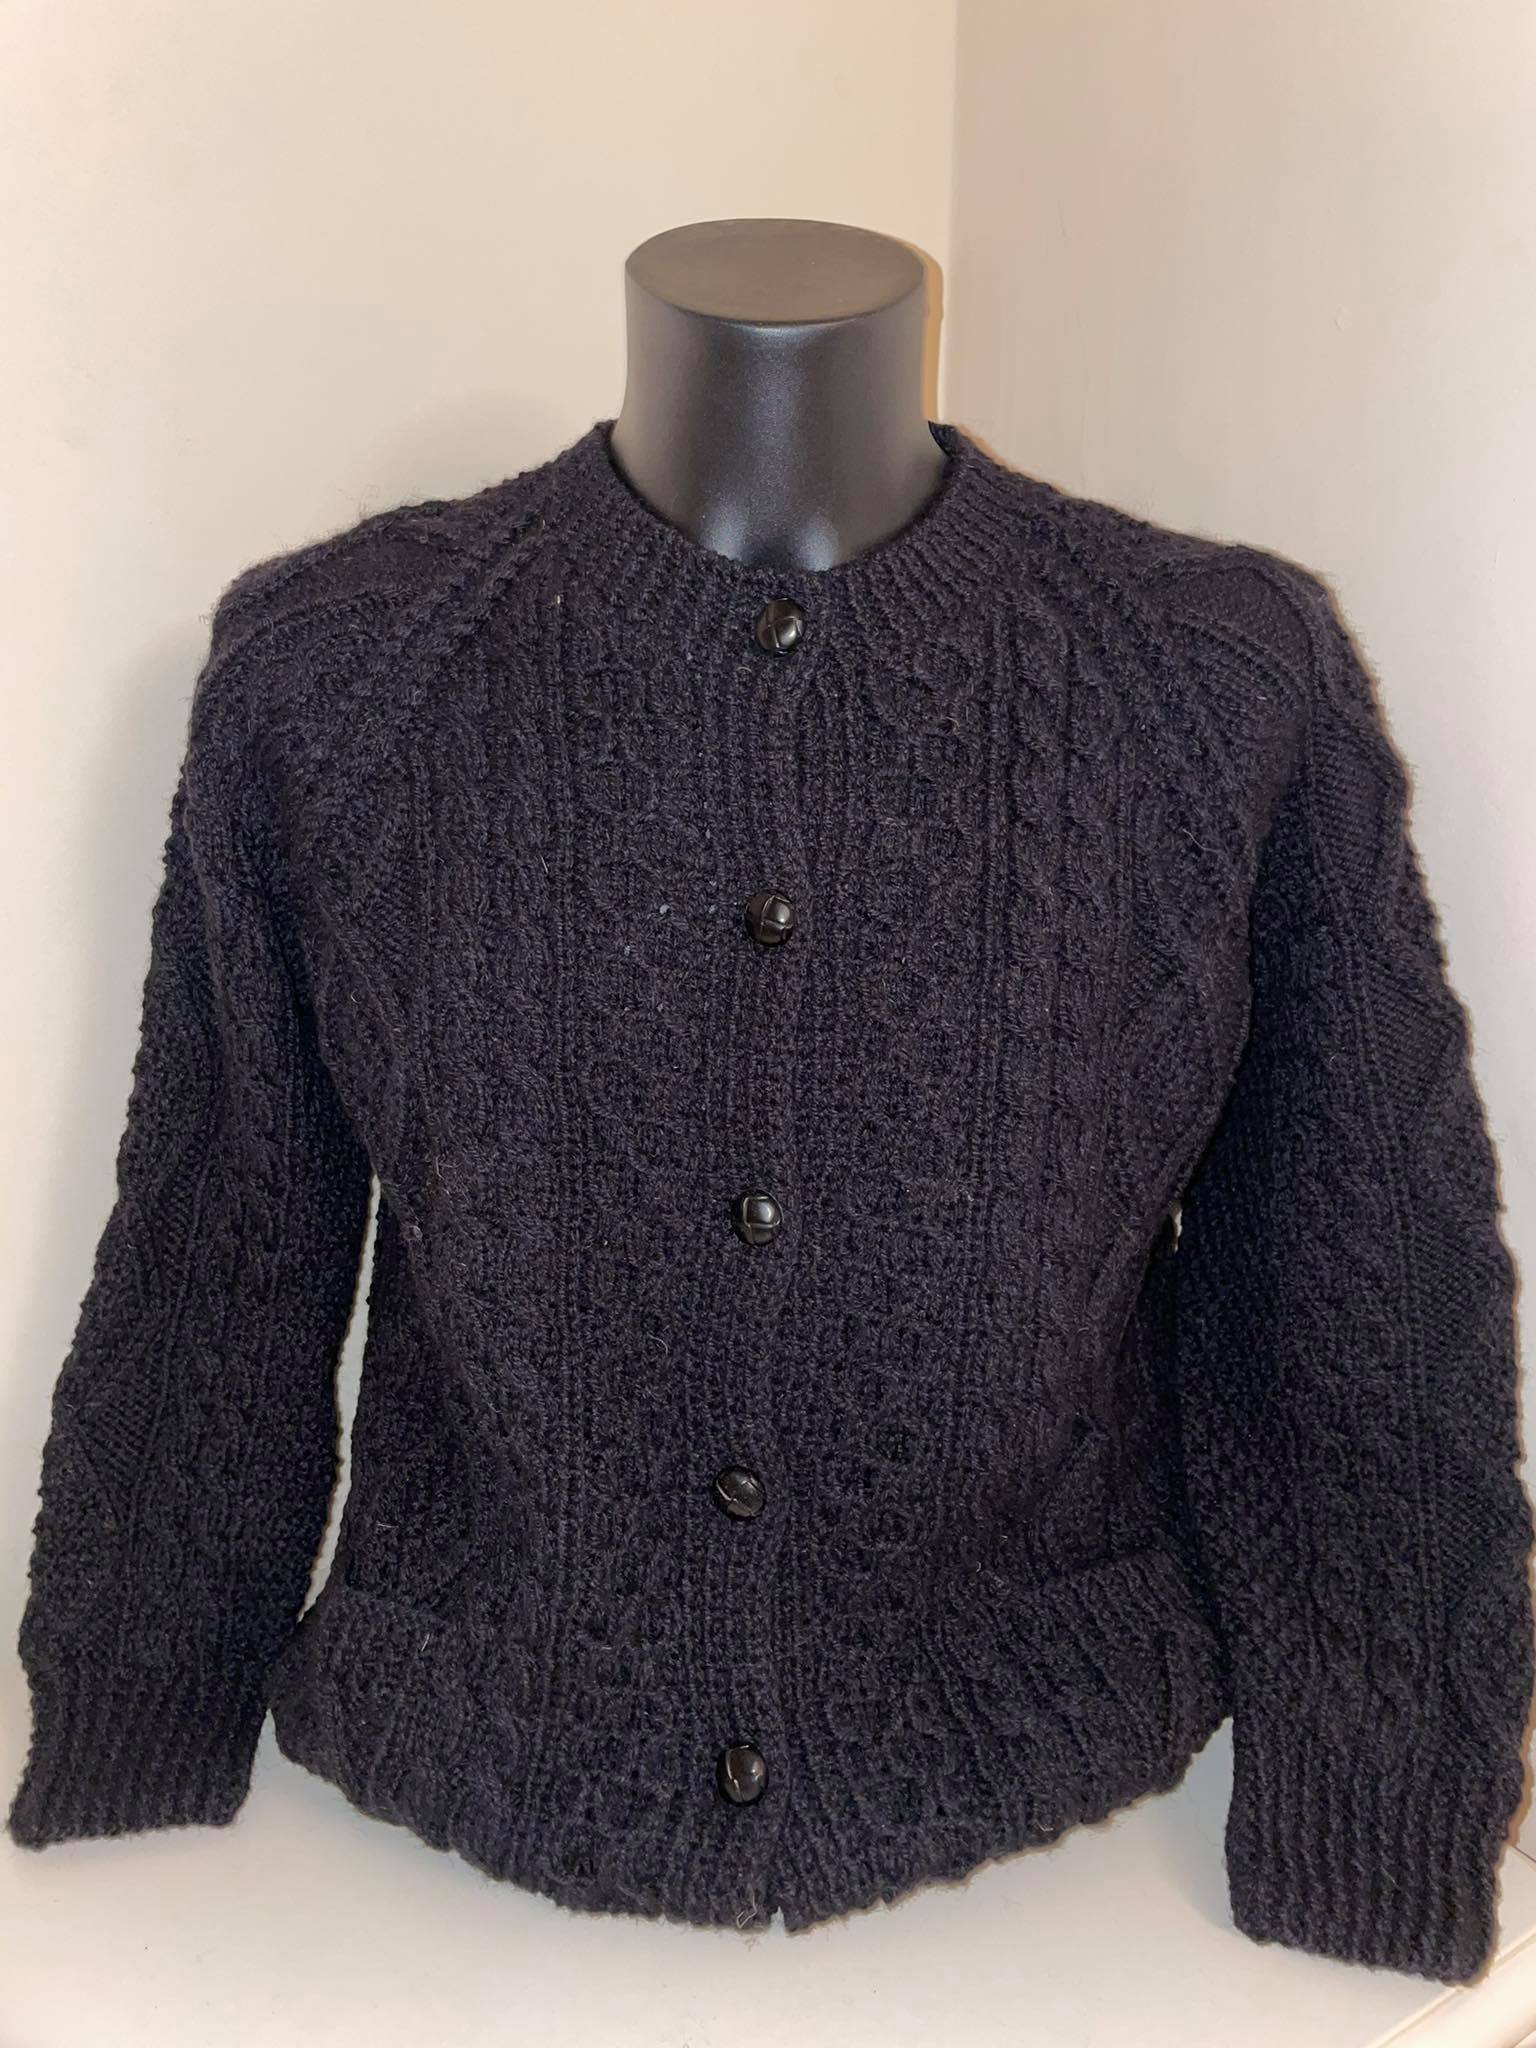 HANDKNIT ARAN JACKET (HKAJ5) - Aran Islands Sweaters